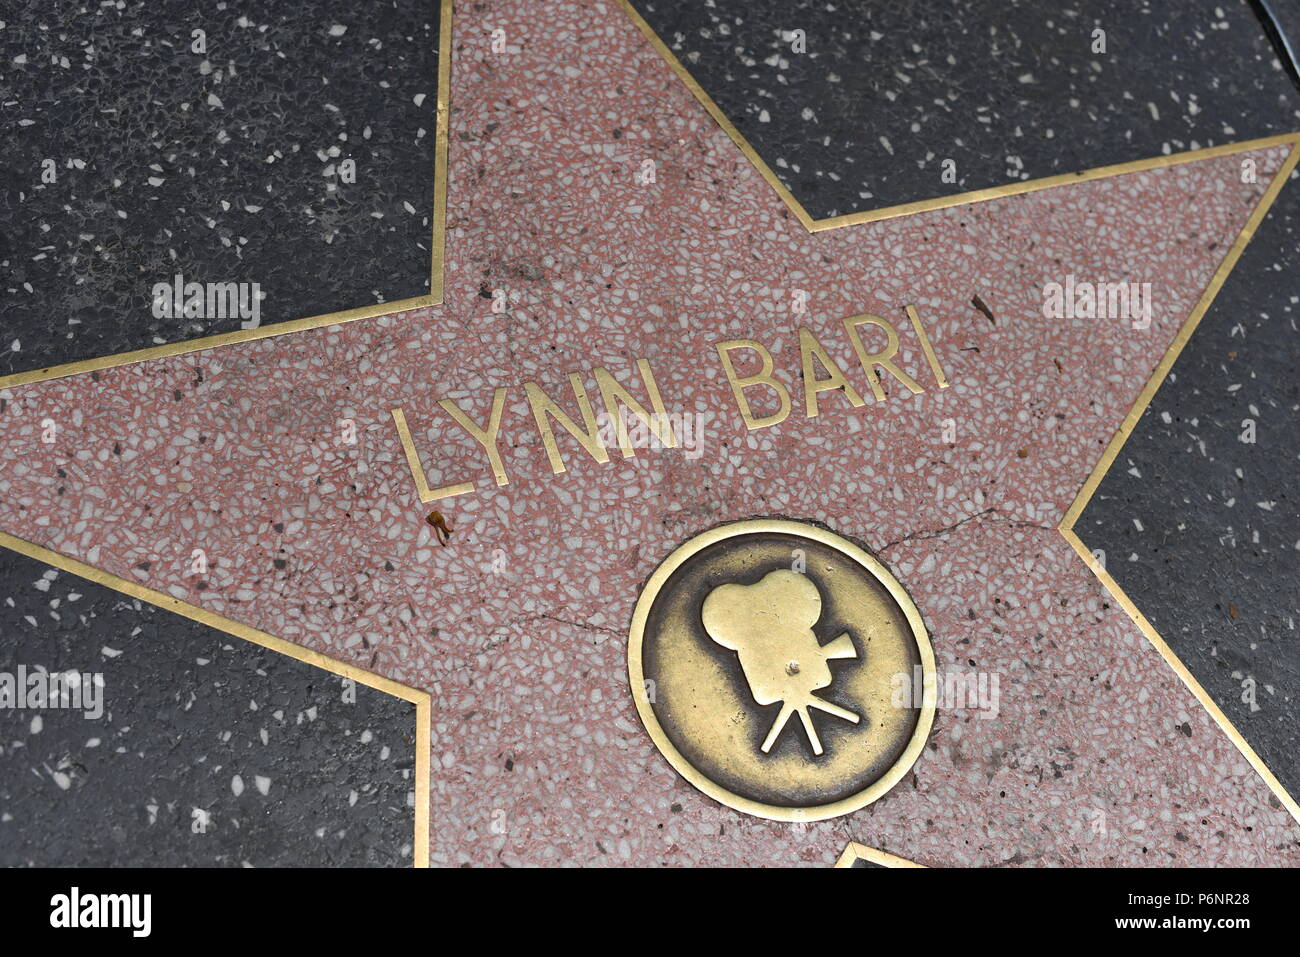 HOLLYWOOD, CA - 29 Giugno: Lynn Bari stella sulla Hollywood Walk of Fame in Hollywood, la California il 29 giugno 2018. Foto Stock